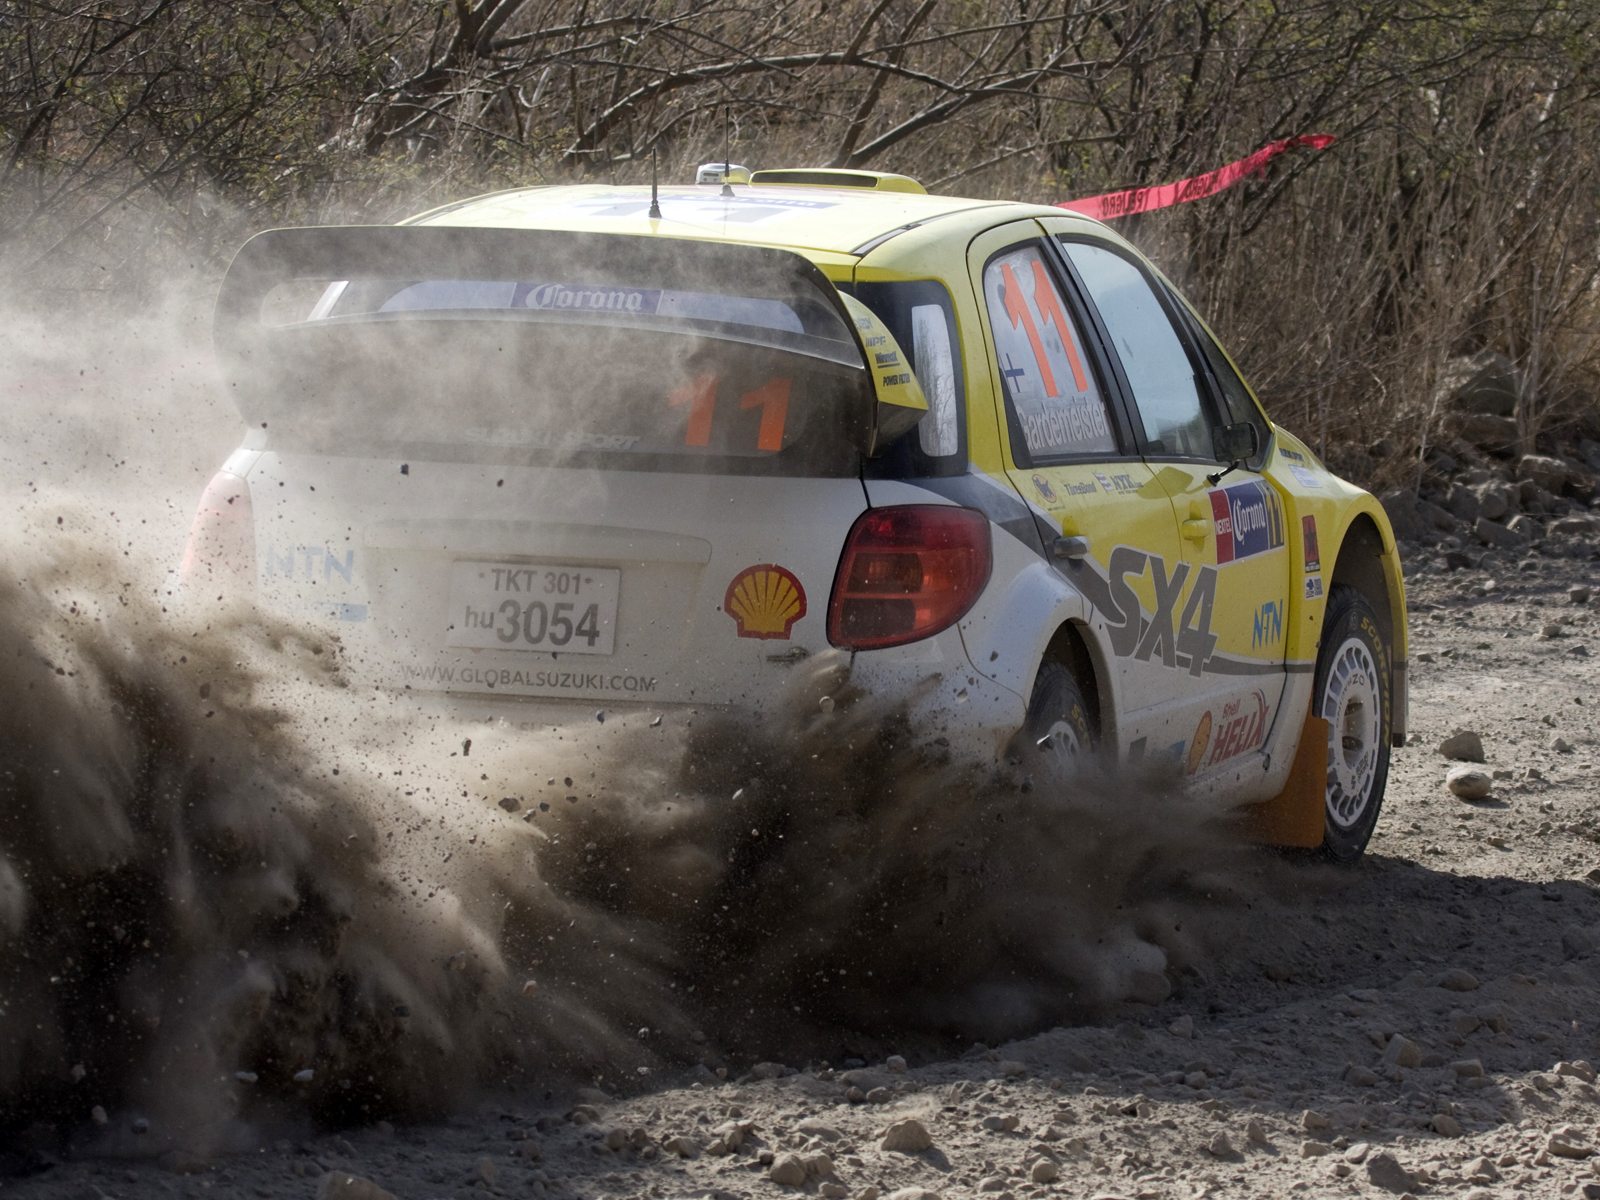 2008, Suzuki, Sx4, Wrc, Race, Racing, Rally, Ge Wallpaper